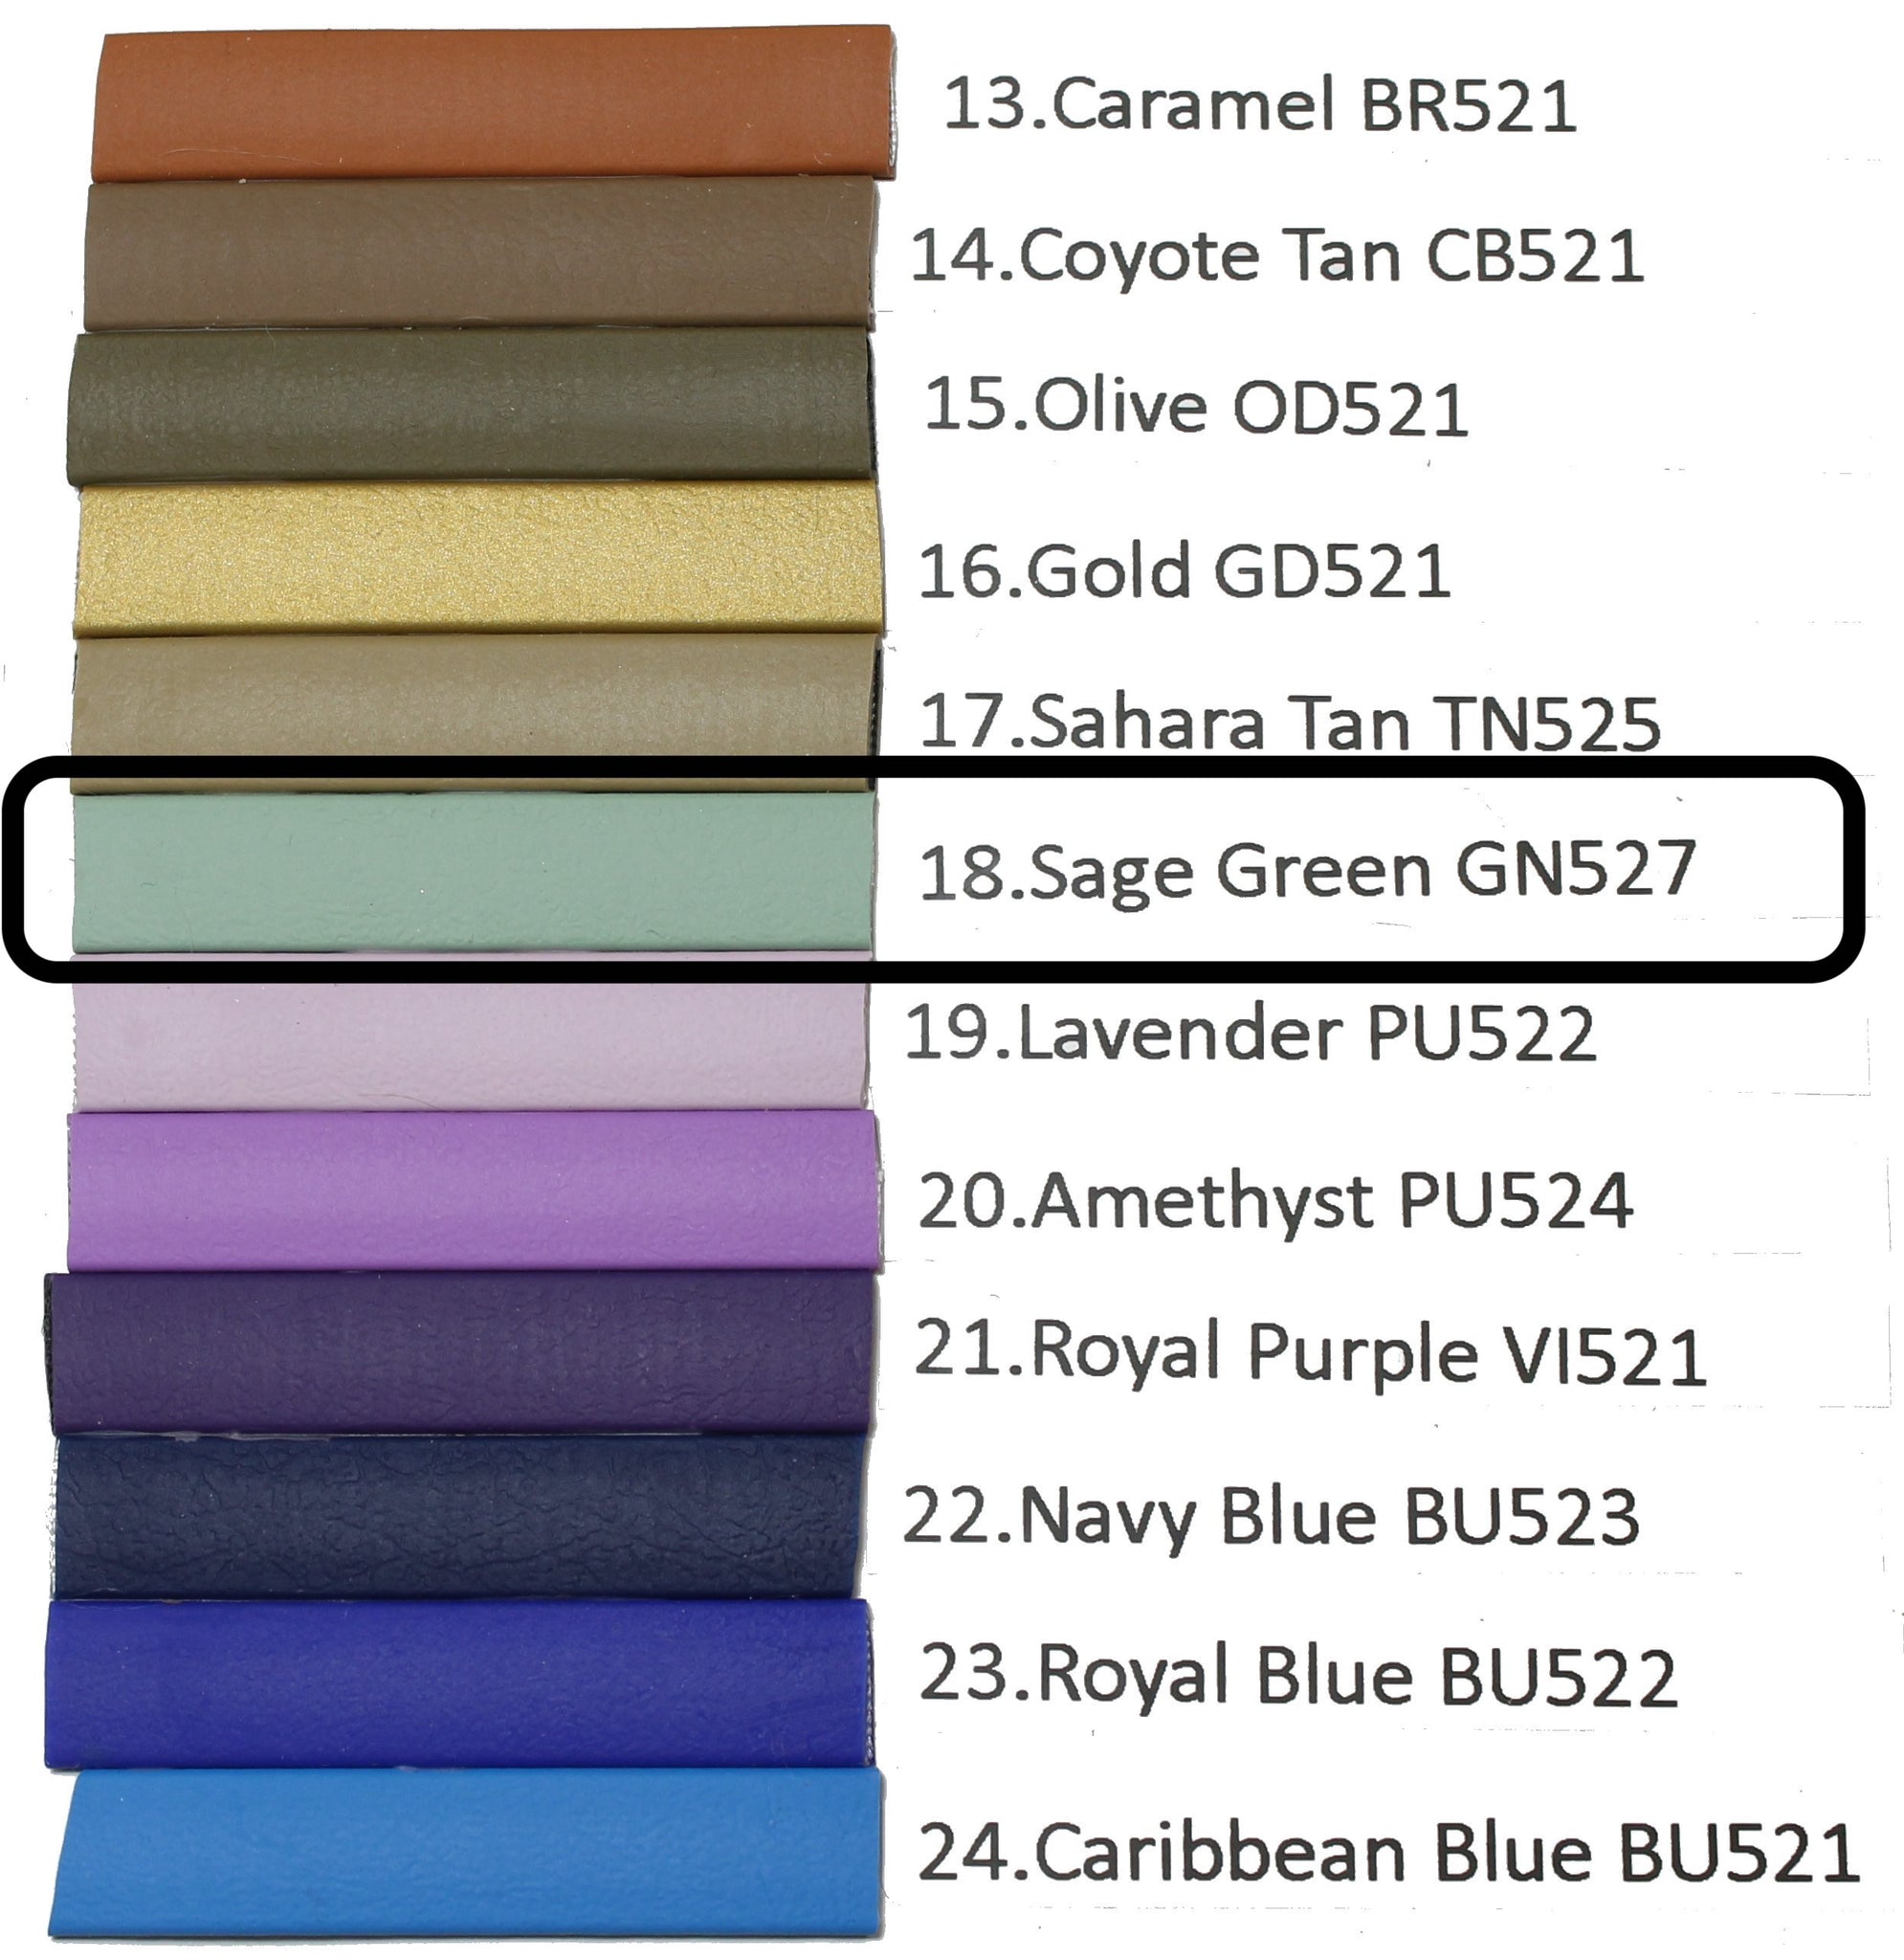 NEW Sage Green Biothane Dog Collar - 3/4" (20mm) wide